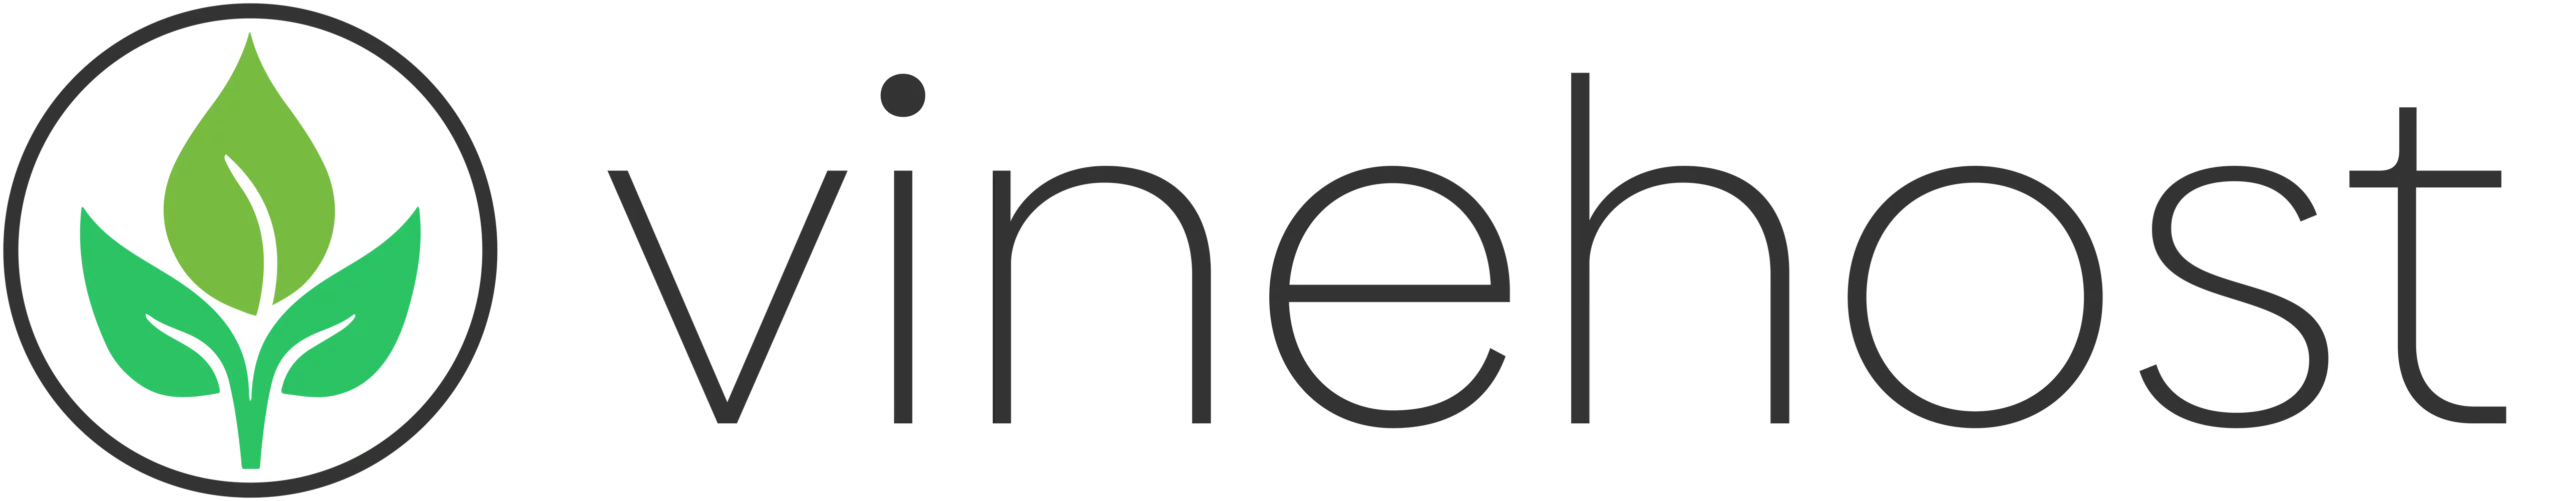 VineHost logo